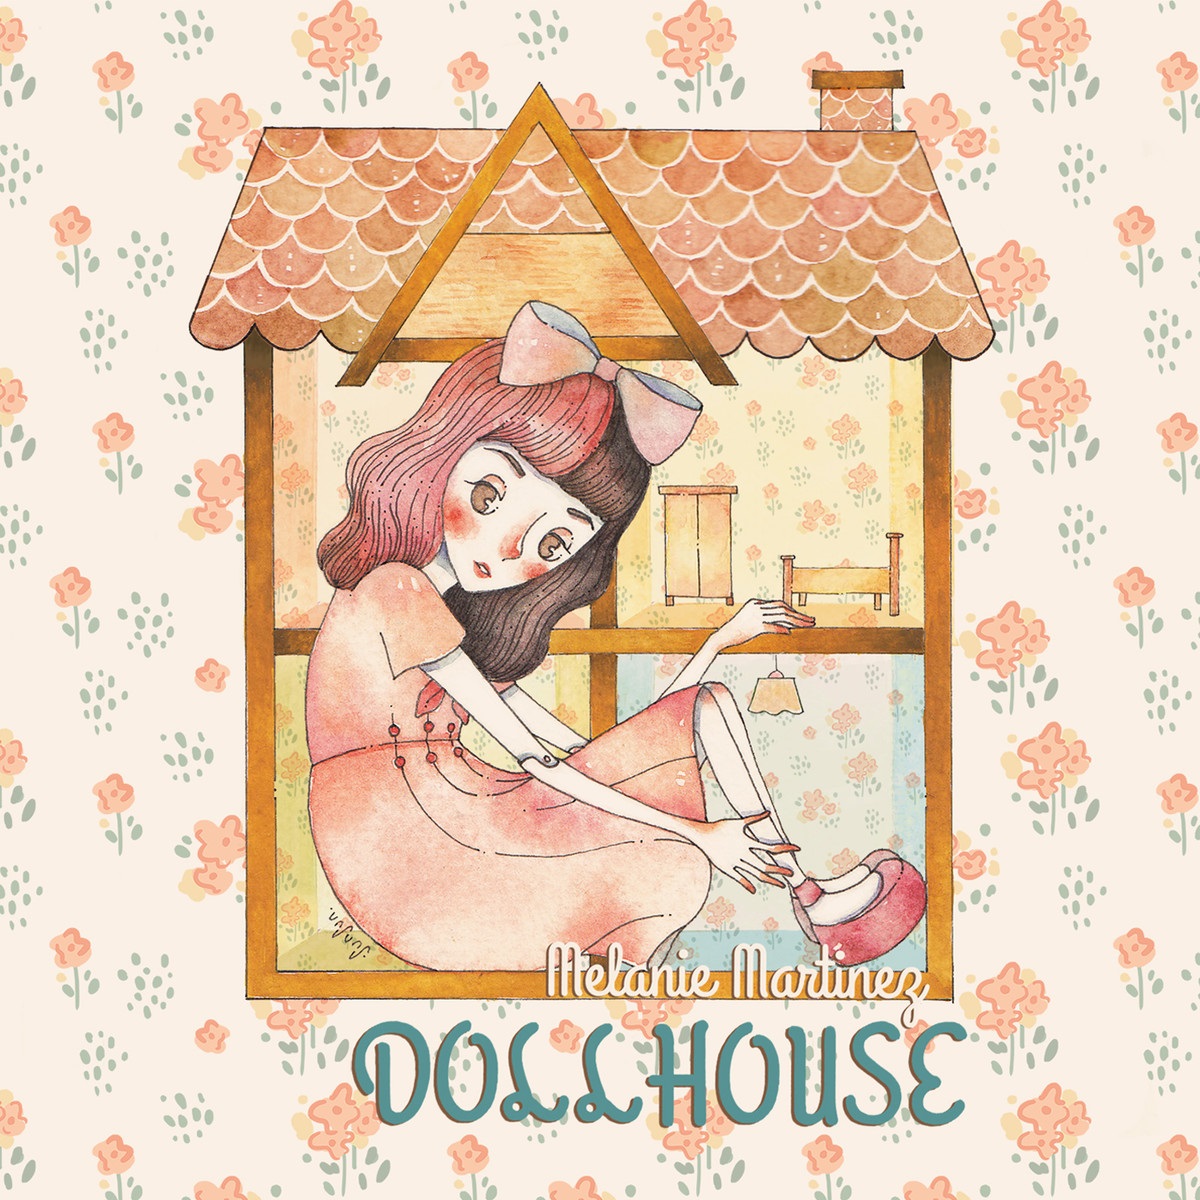 The Haunted Dollhouse (Video 2013) - IMDb